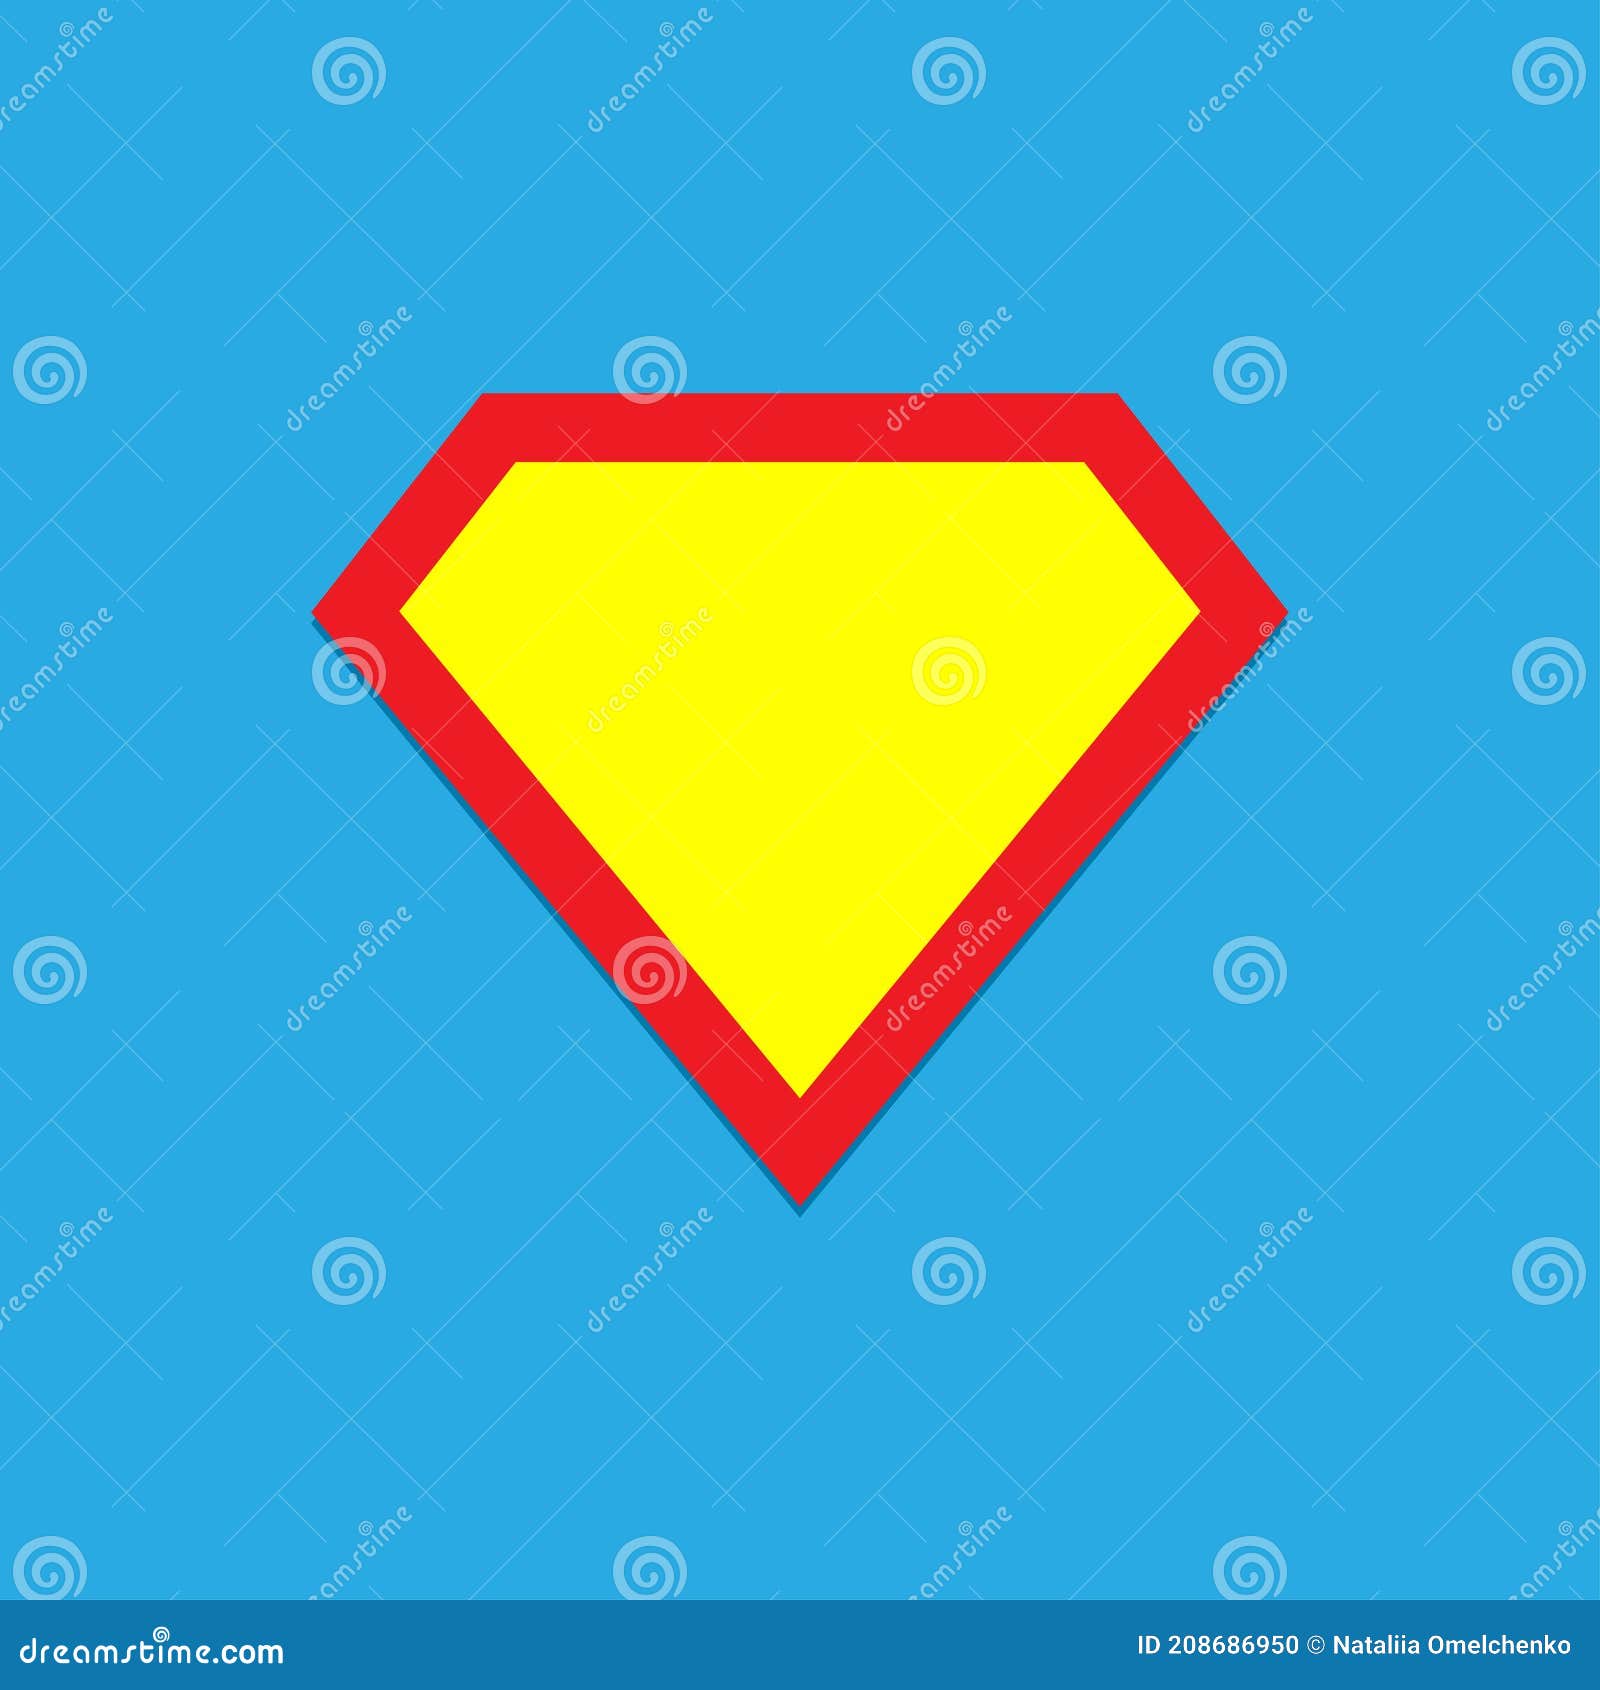 superhero  icon  on blue background. superman logo template